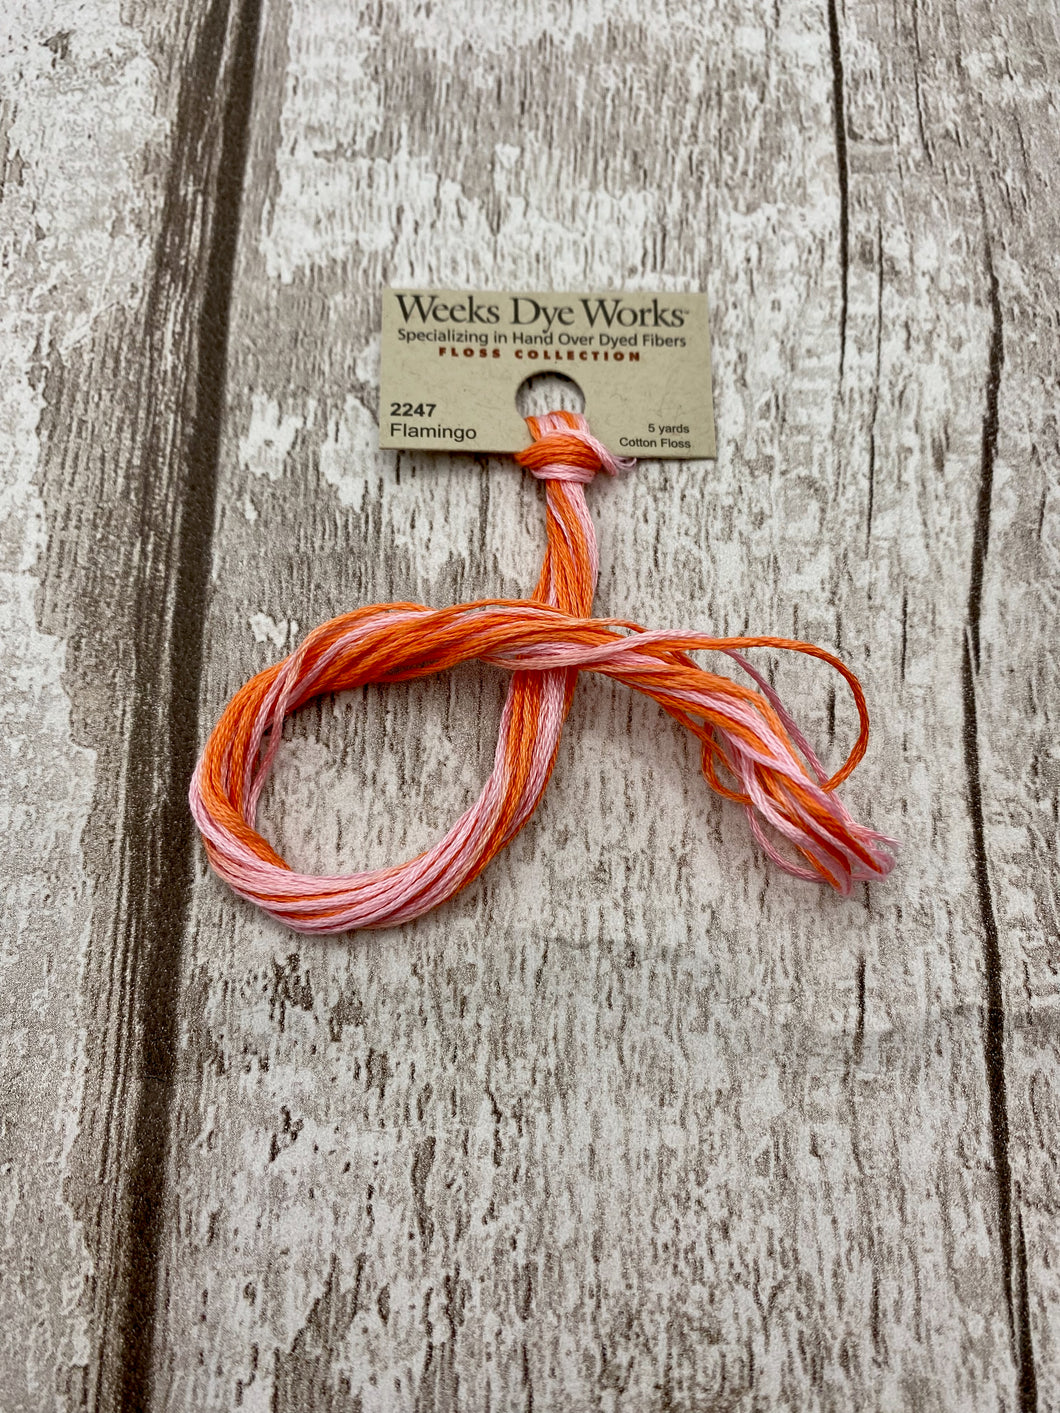 Flamingo (#2247), Weeks Dye Works 6-strand cotton floss